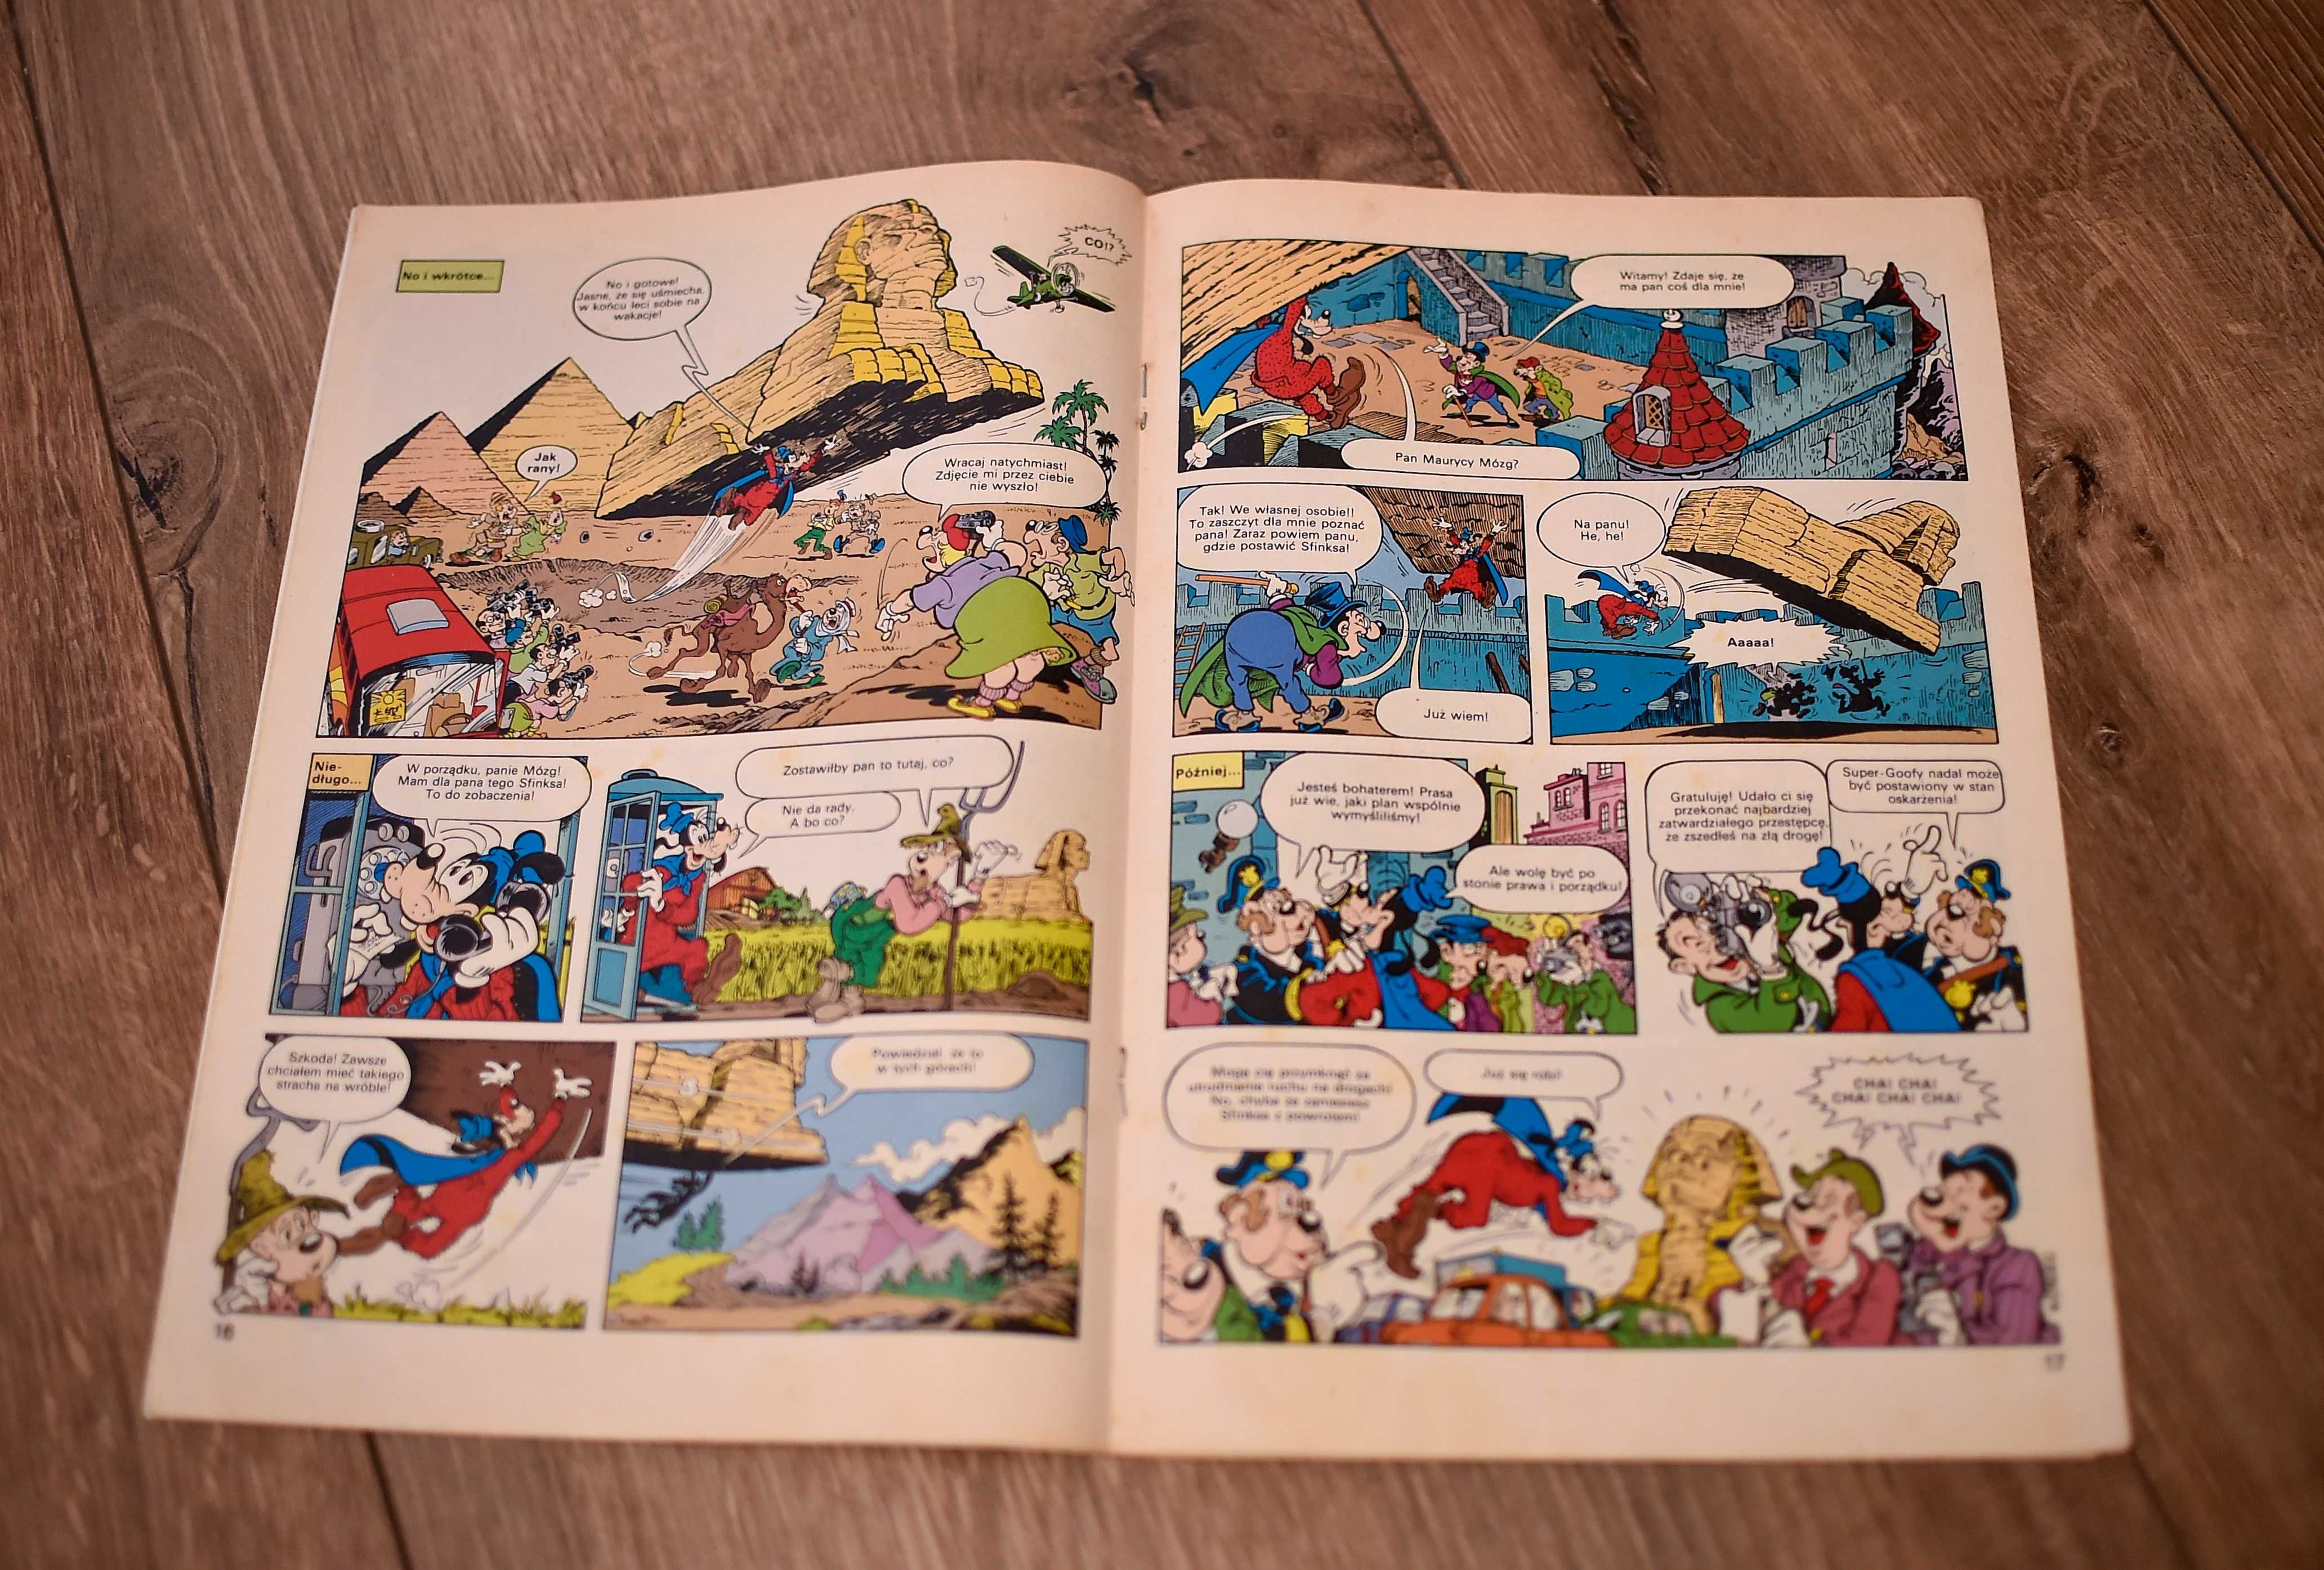 Komiks # Donald Duck 4(15)/1992